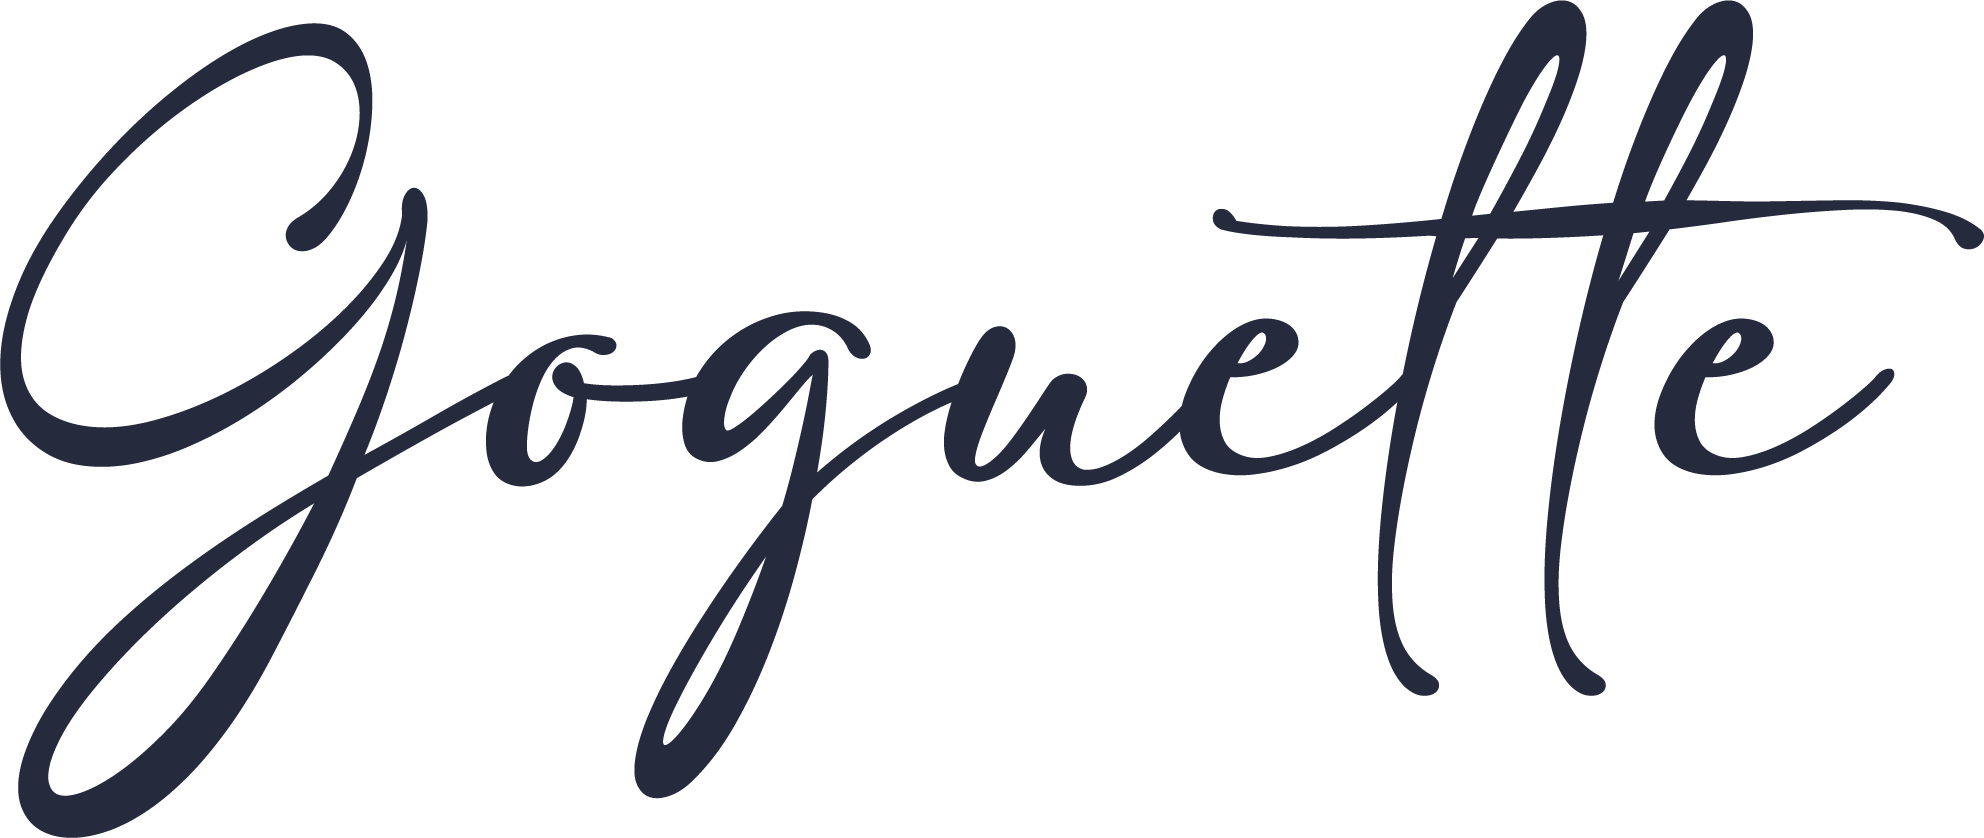 Logo Goguette installation Lift Systeme